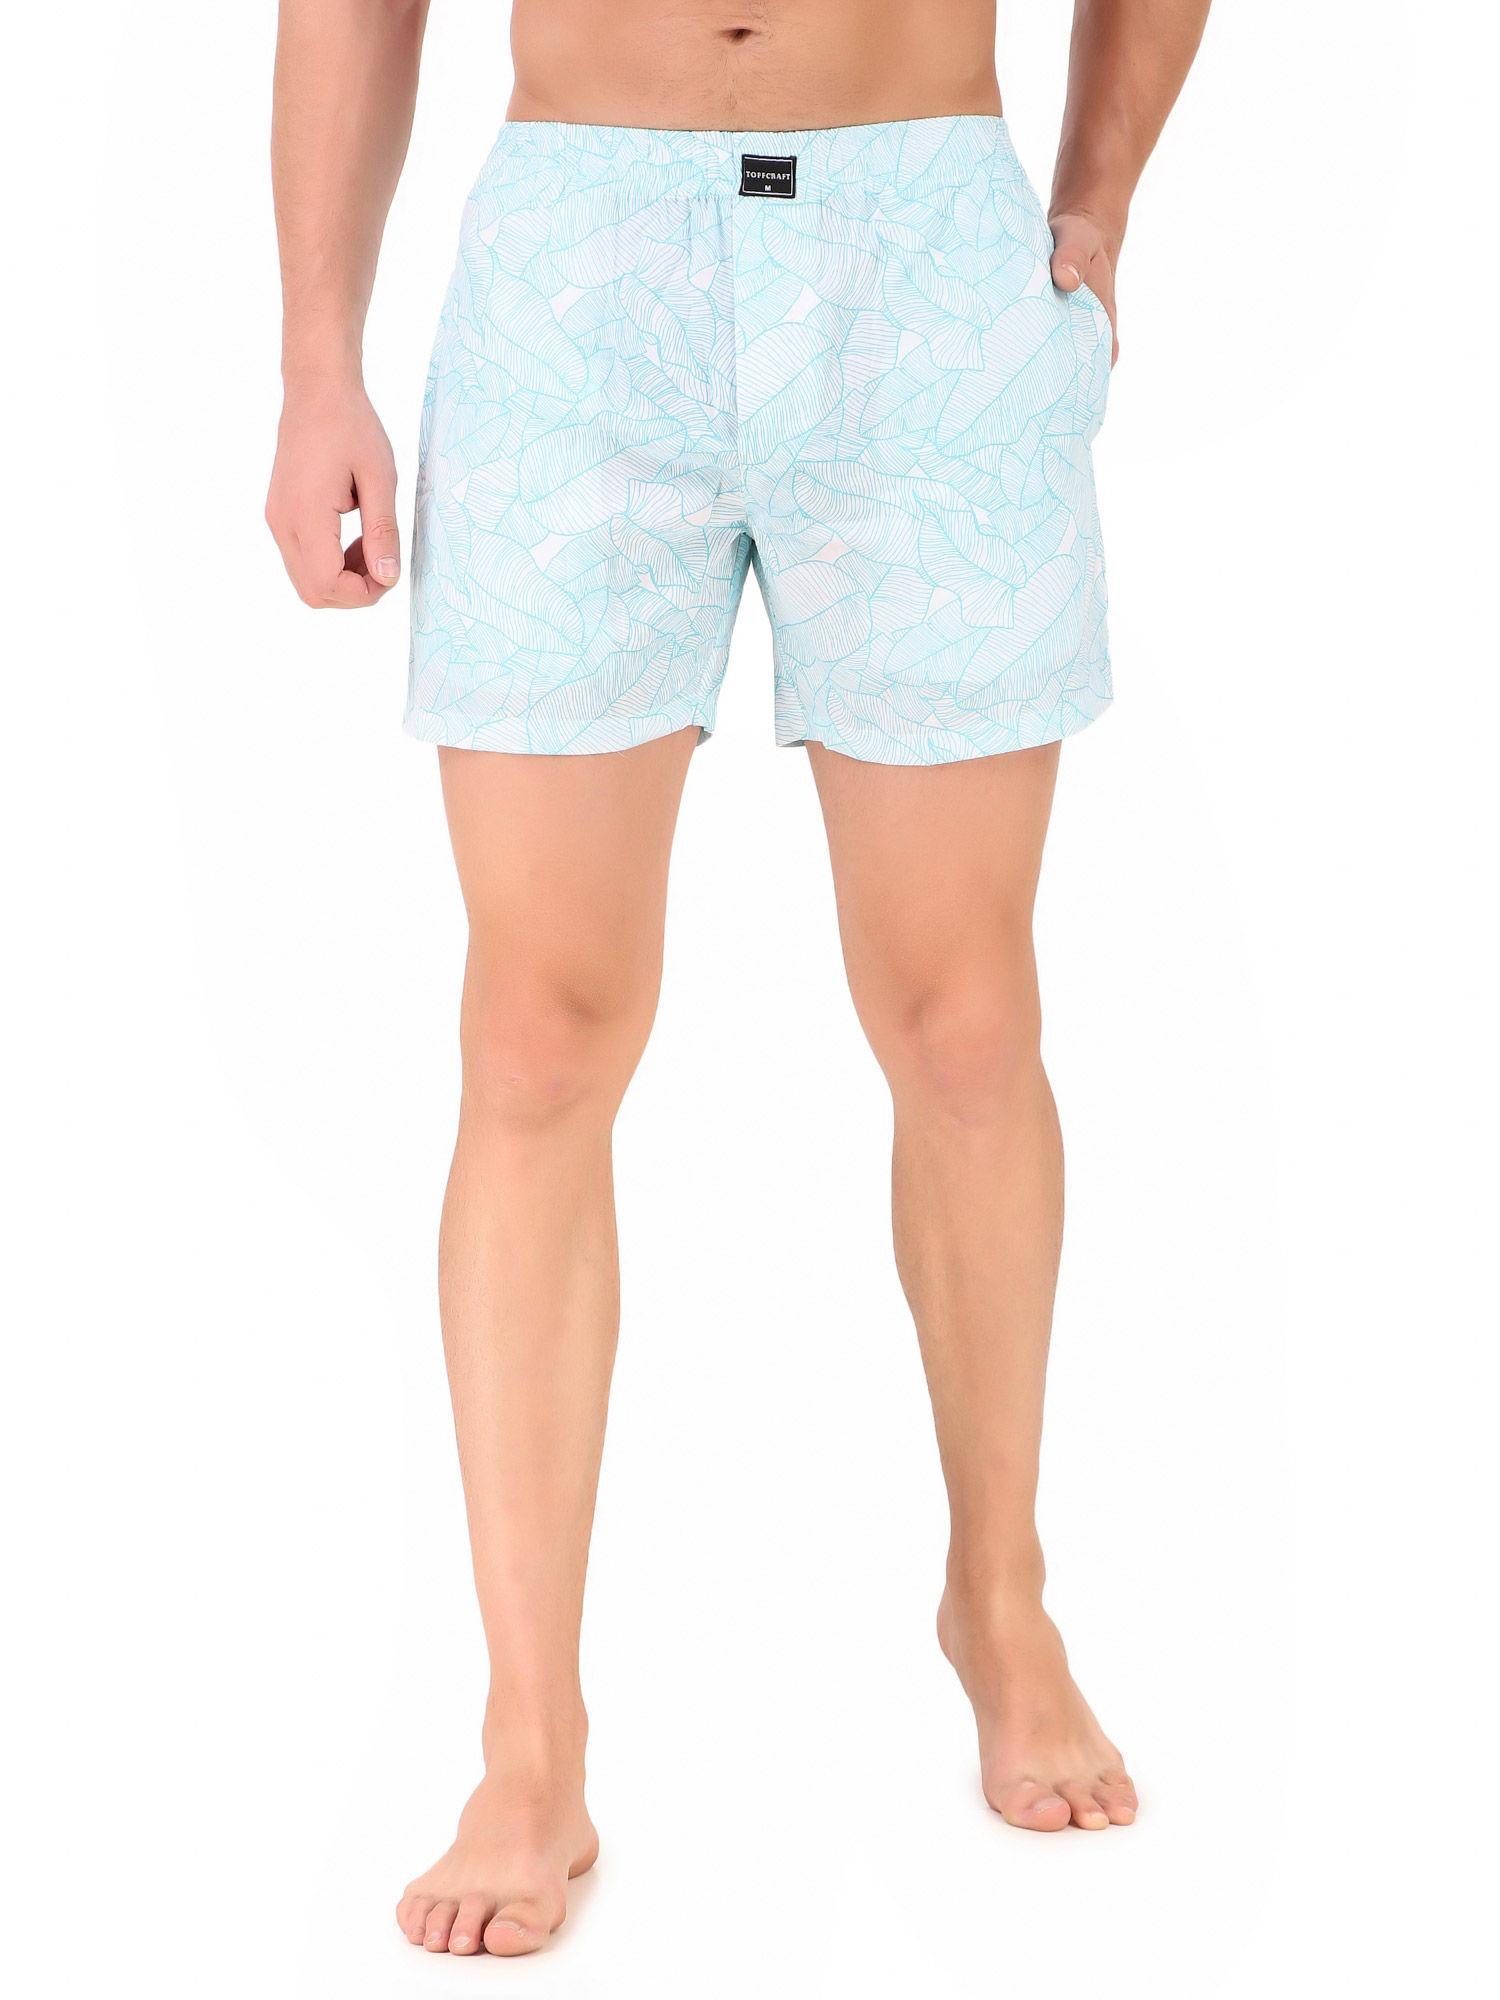 austin beach blue boxer shorts white